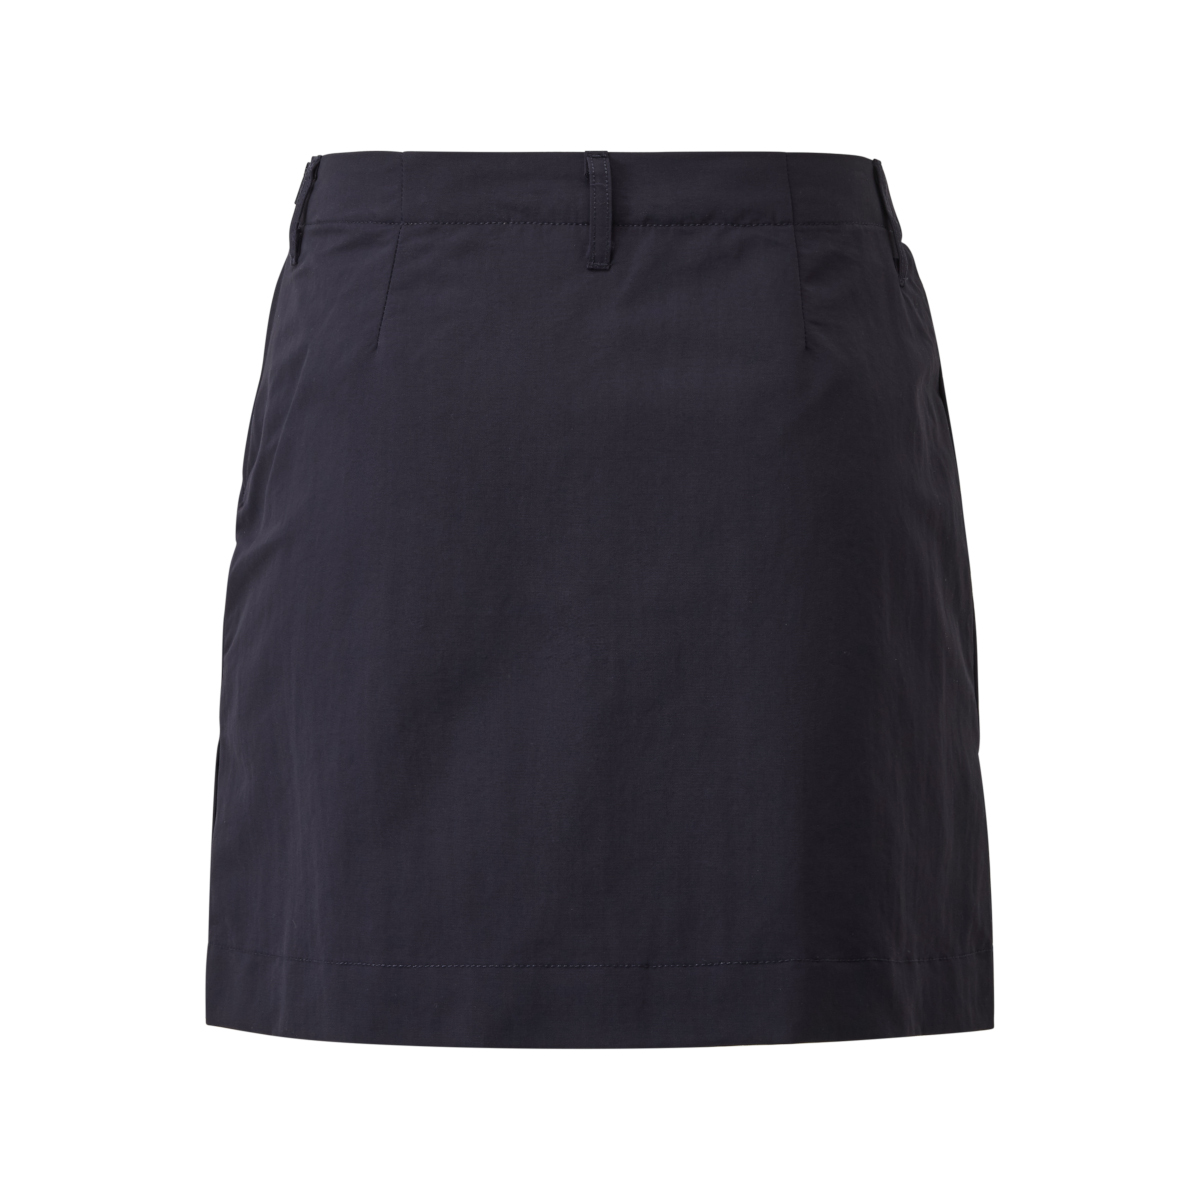 Gill UV Tec jupe-short, femme - bleu marine, taille 12